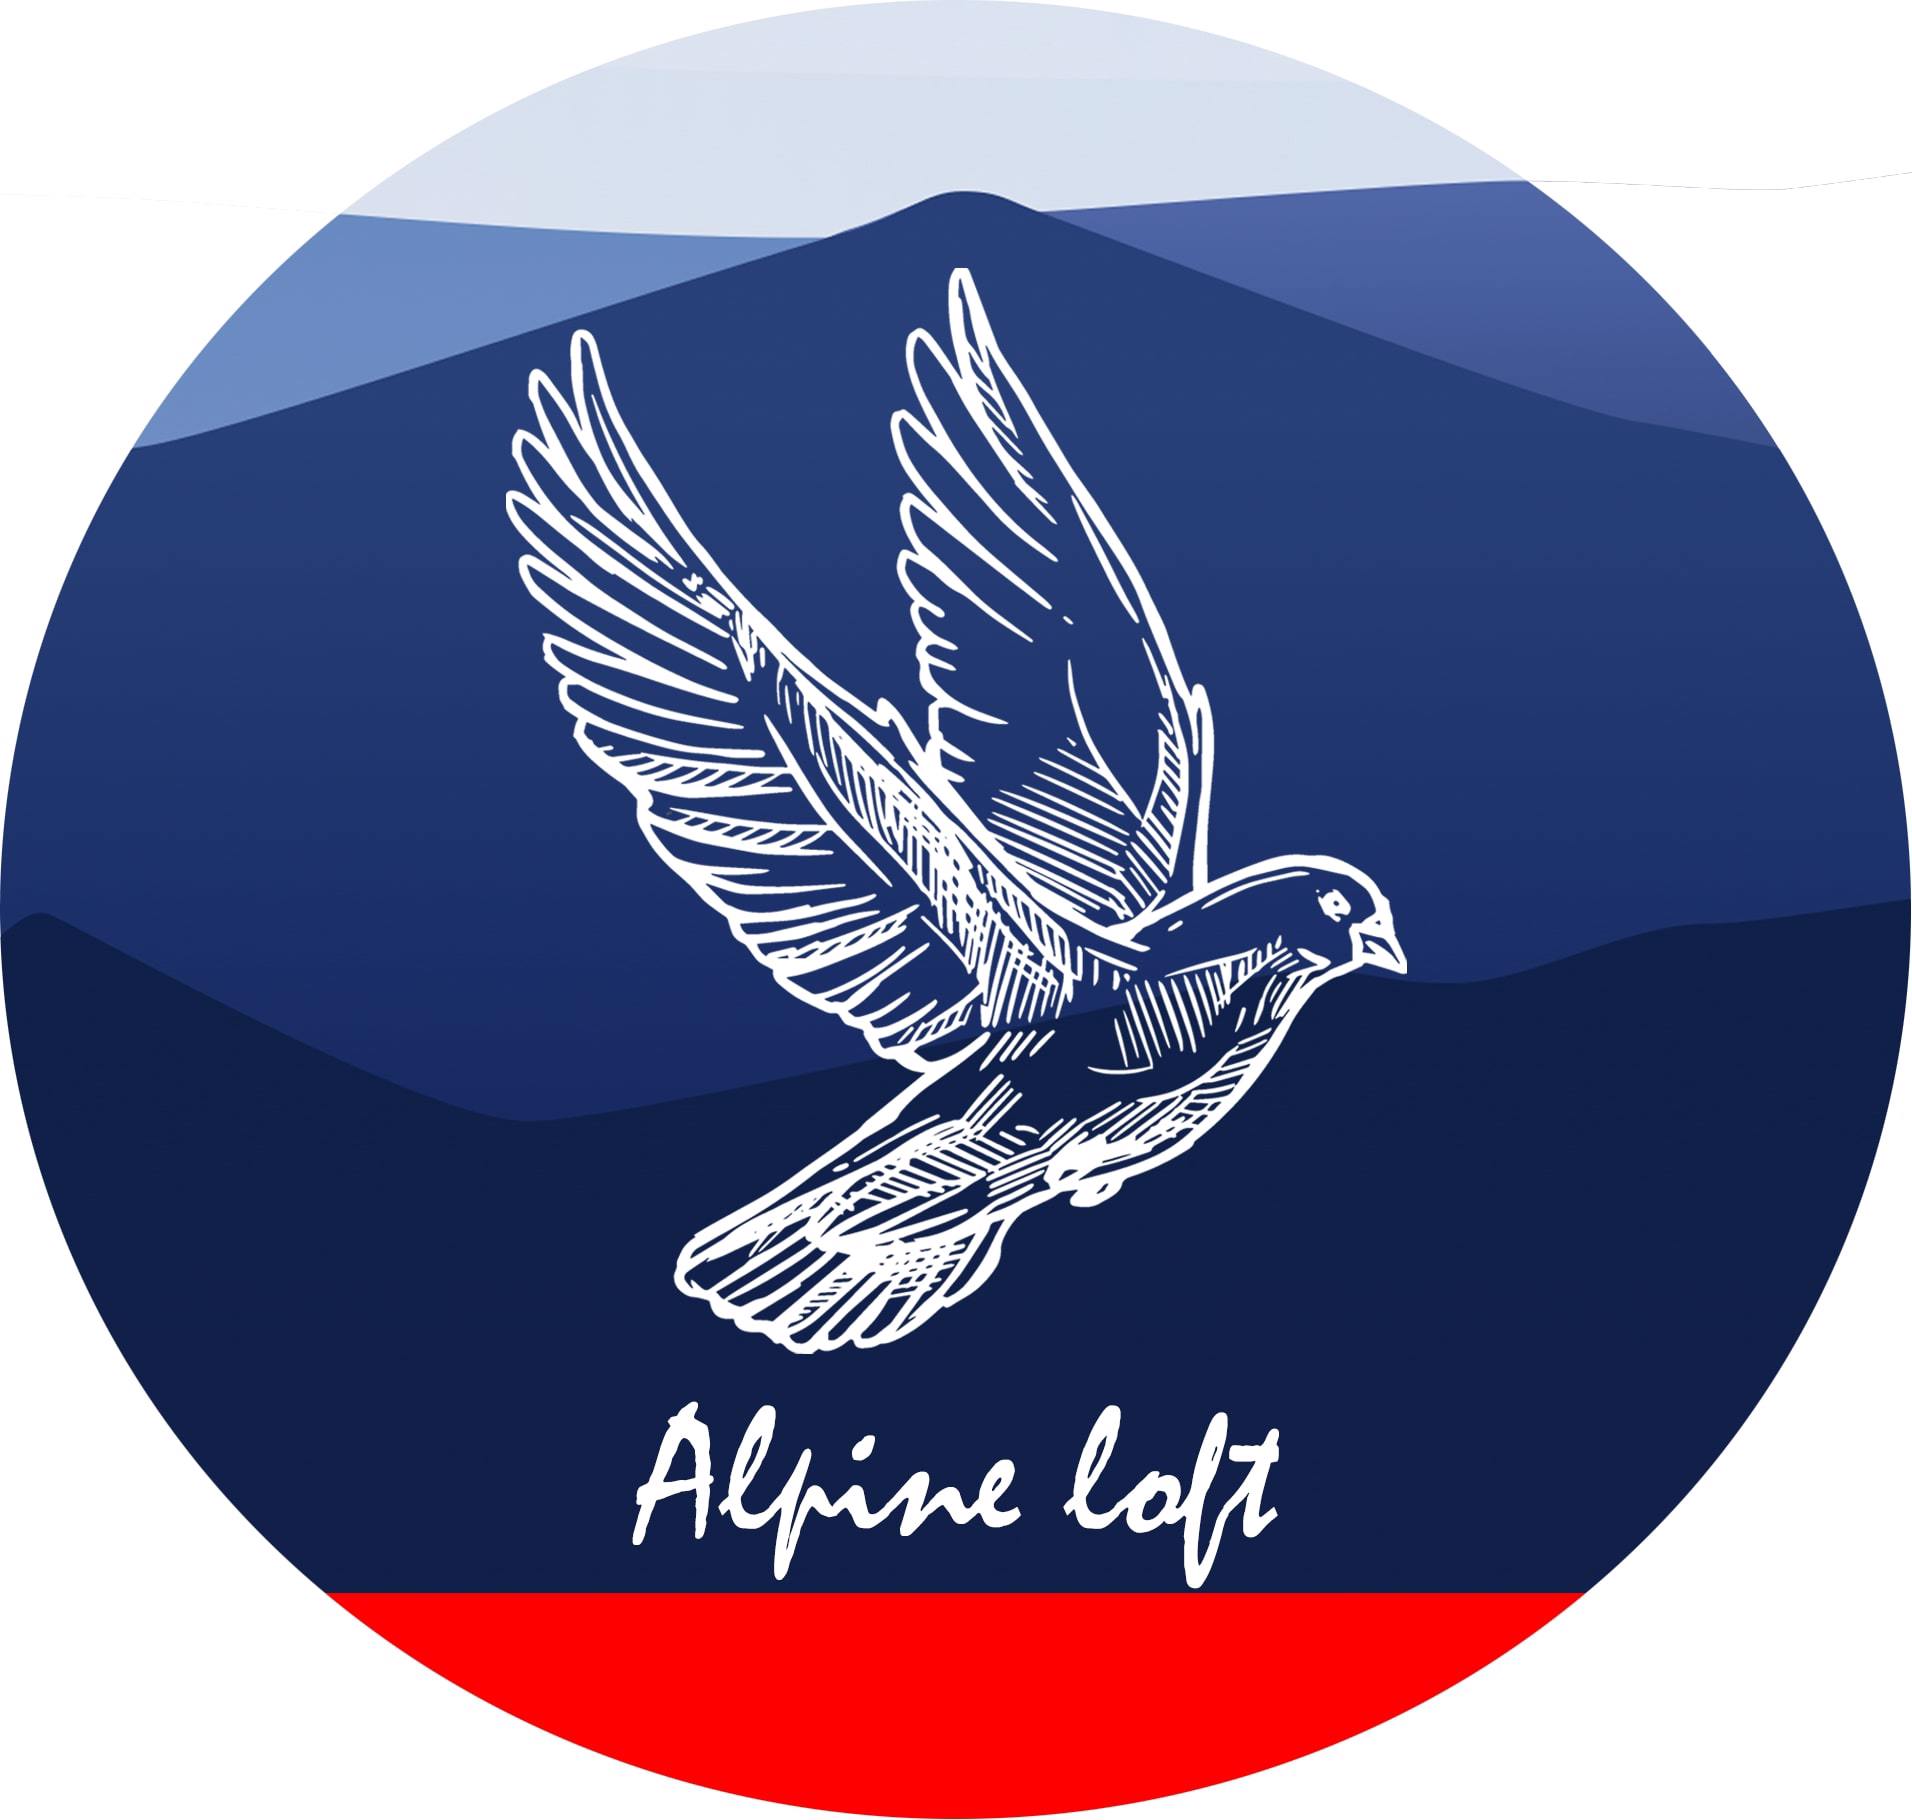 Image_{Alpineloft